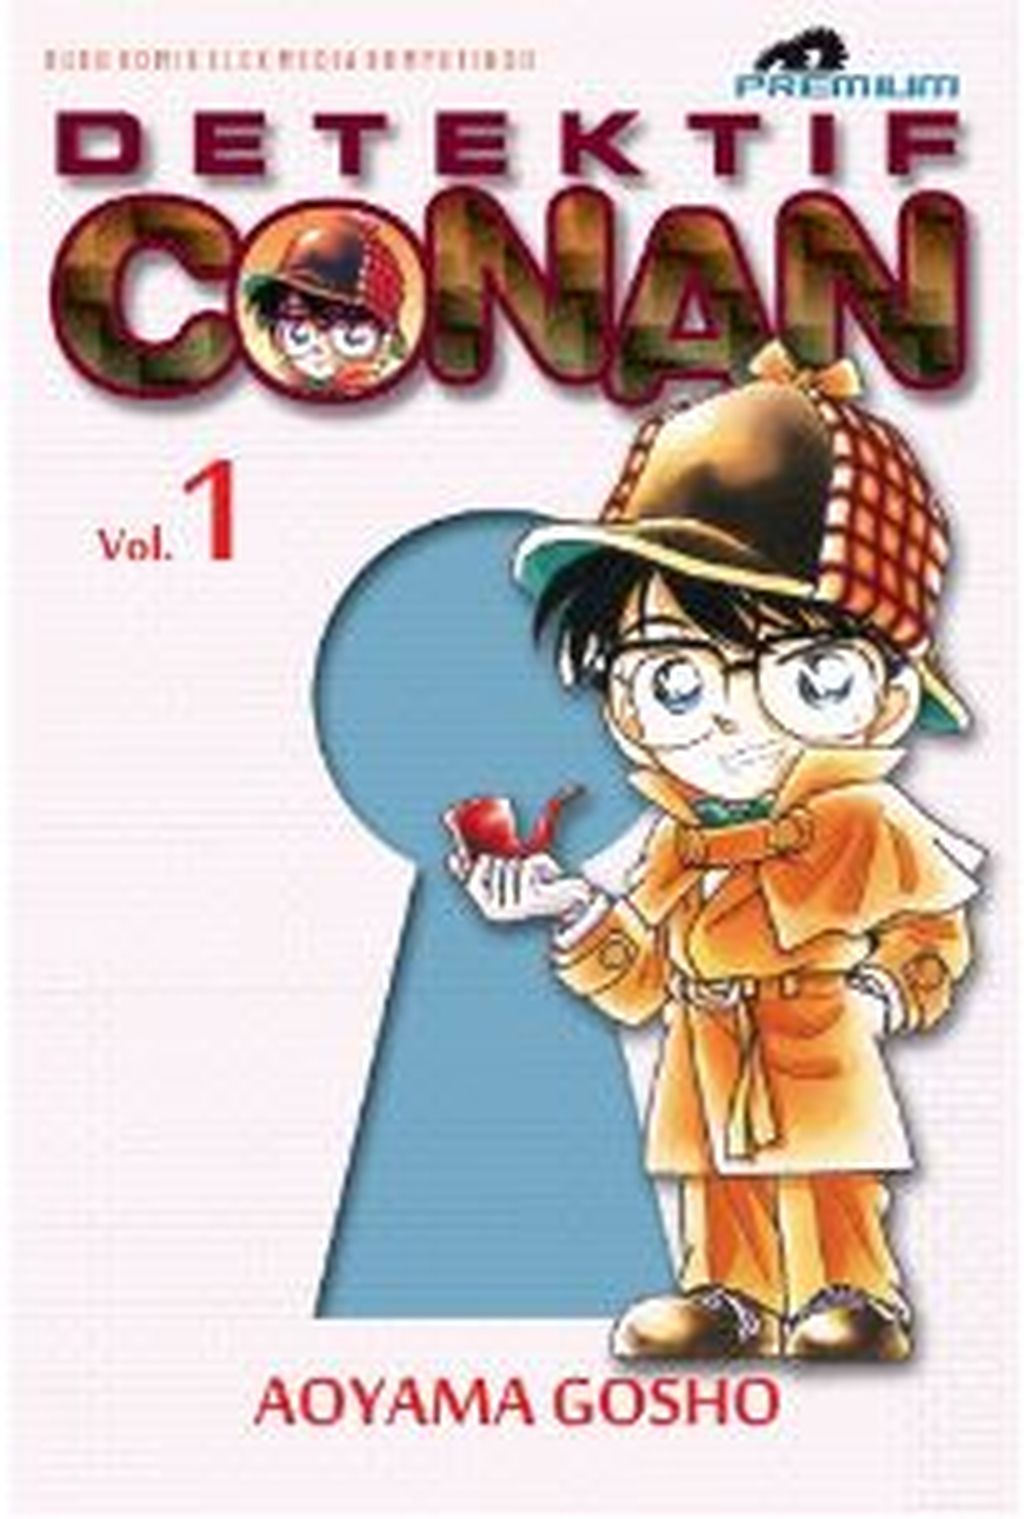 Halaman depan <i>Detektif Conan </i>seri 1 yang dicetak ulang dan dijual di Gramedia.com